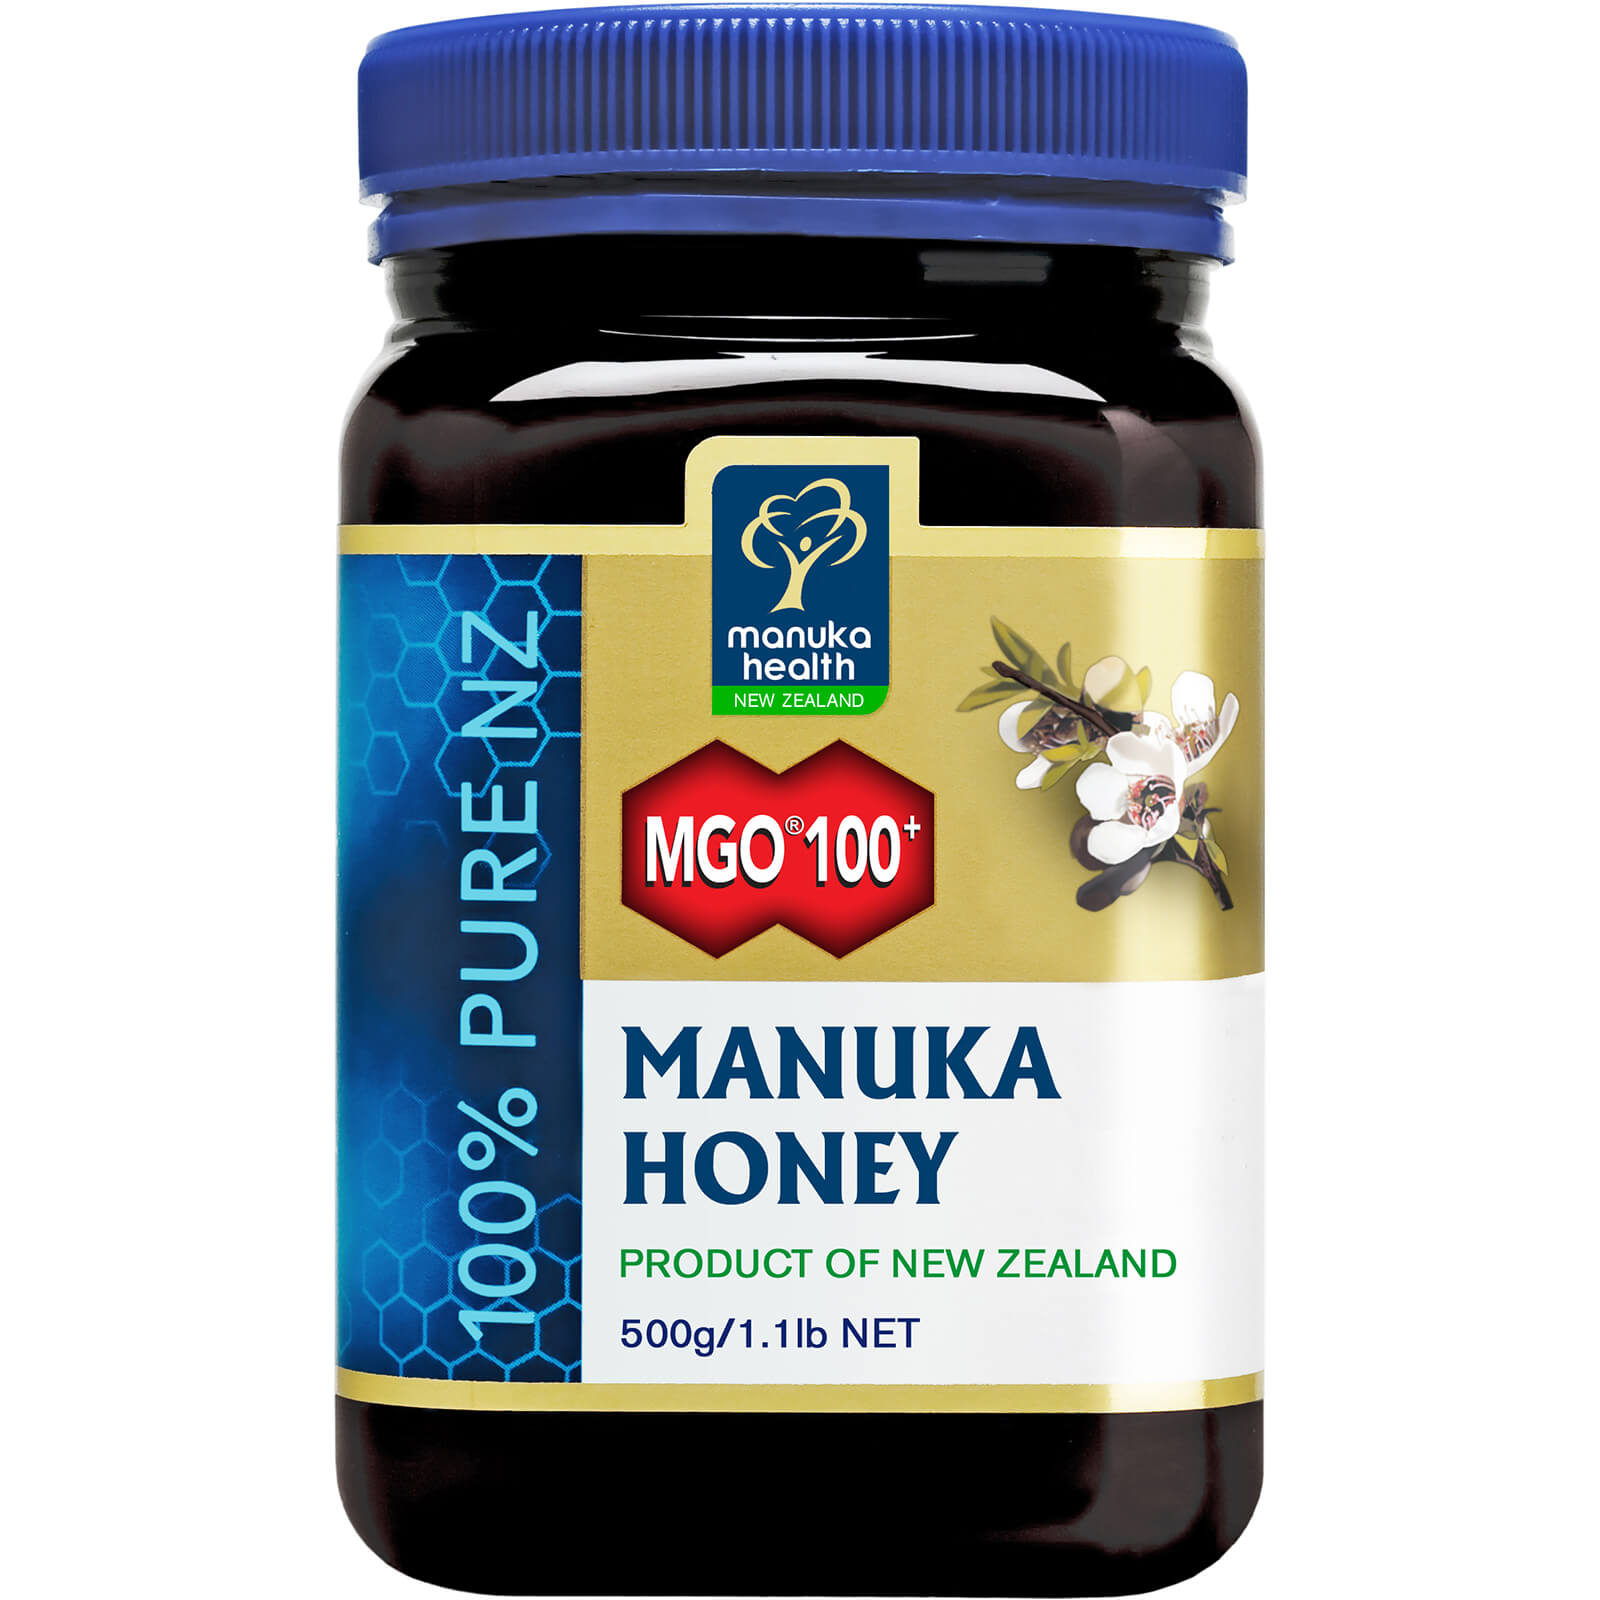 MGO 100+ Pure Manuka Honey Blend - 500g